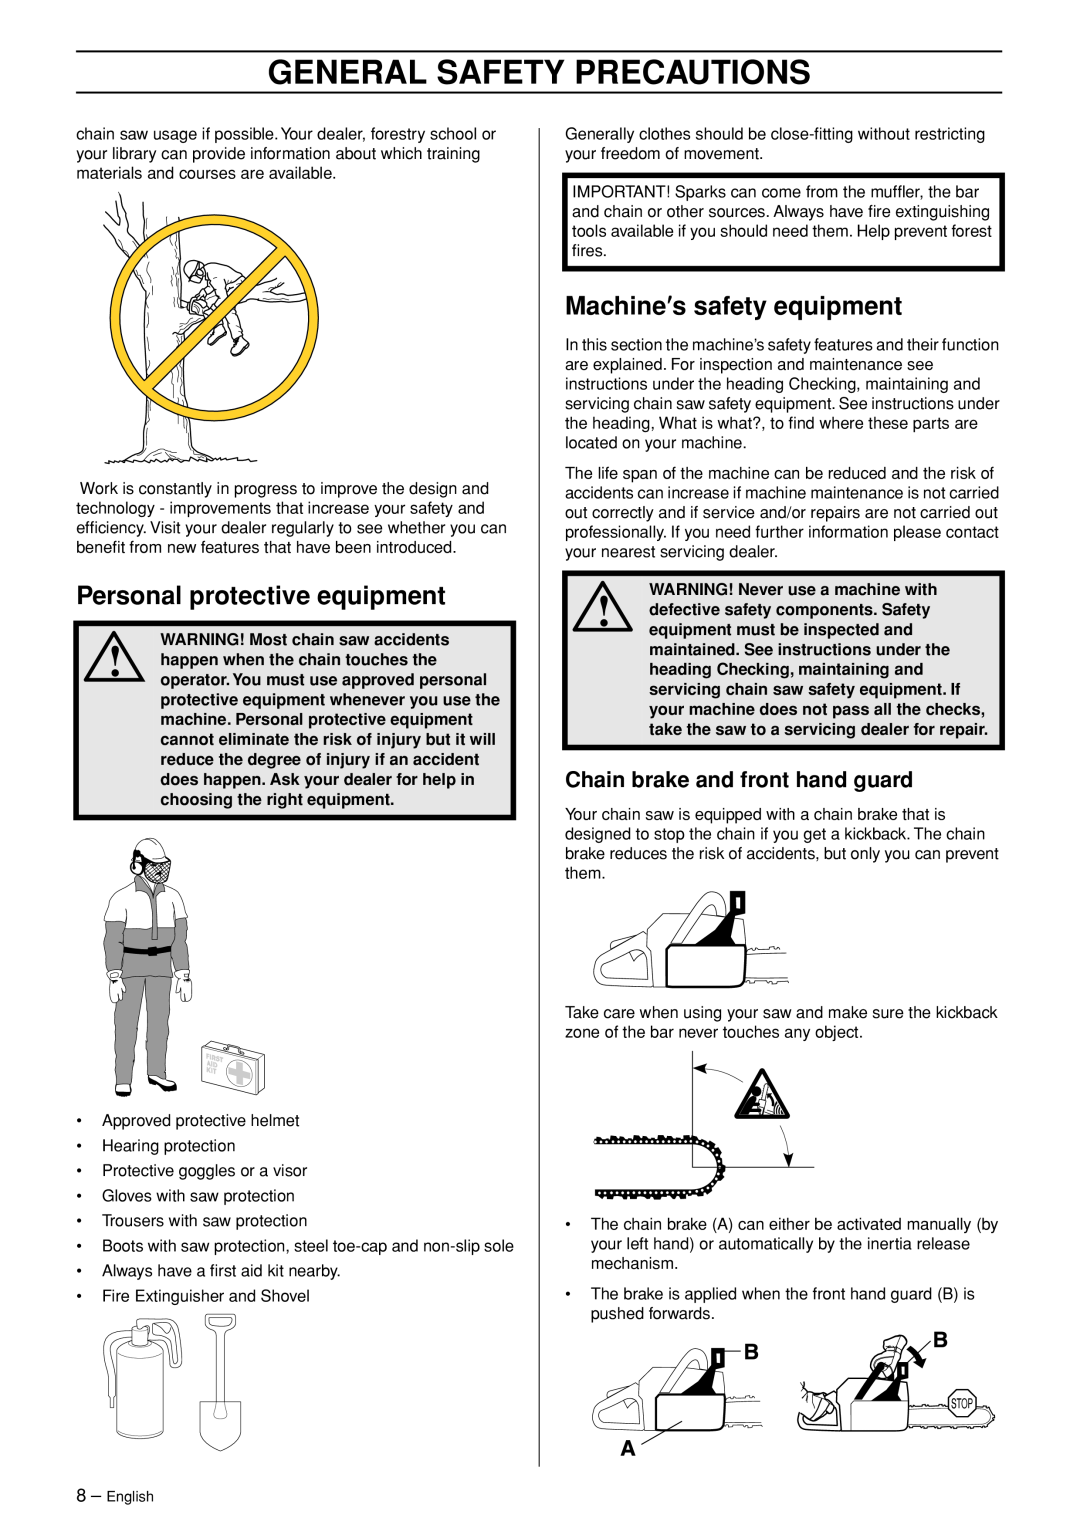 Husqvarna 365 EPA I manual Personal protective equipment, Machine′s safety equipment, Chain brake and front hand guard 